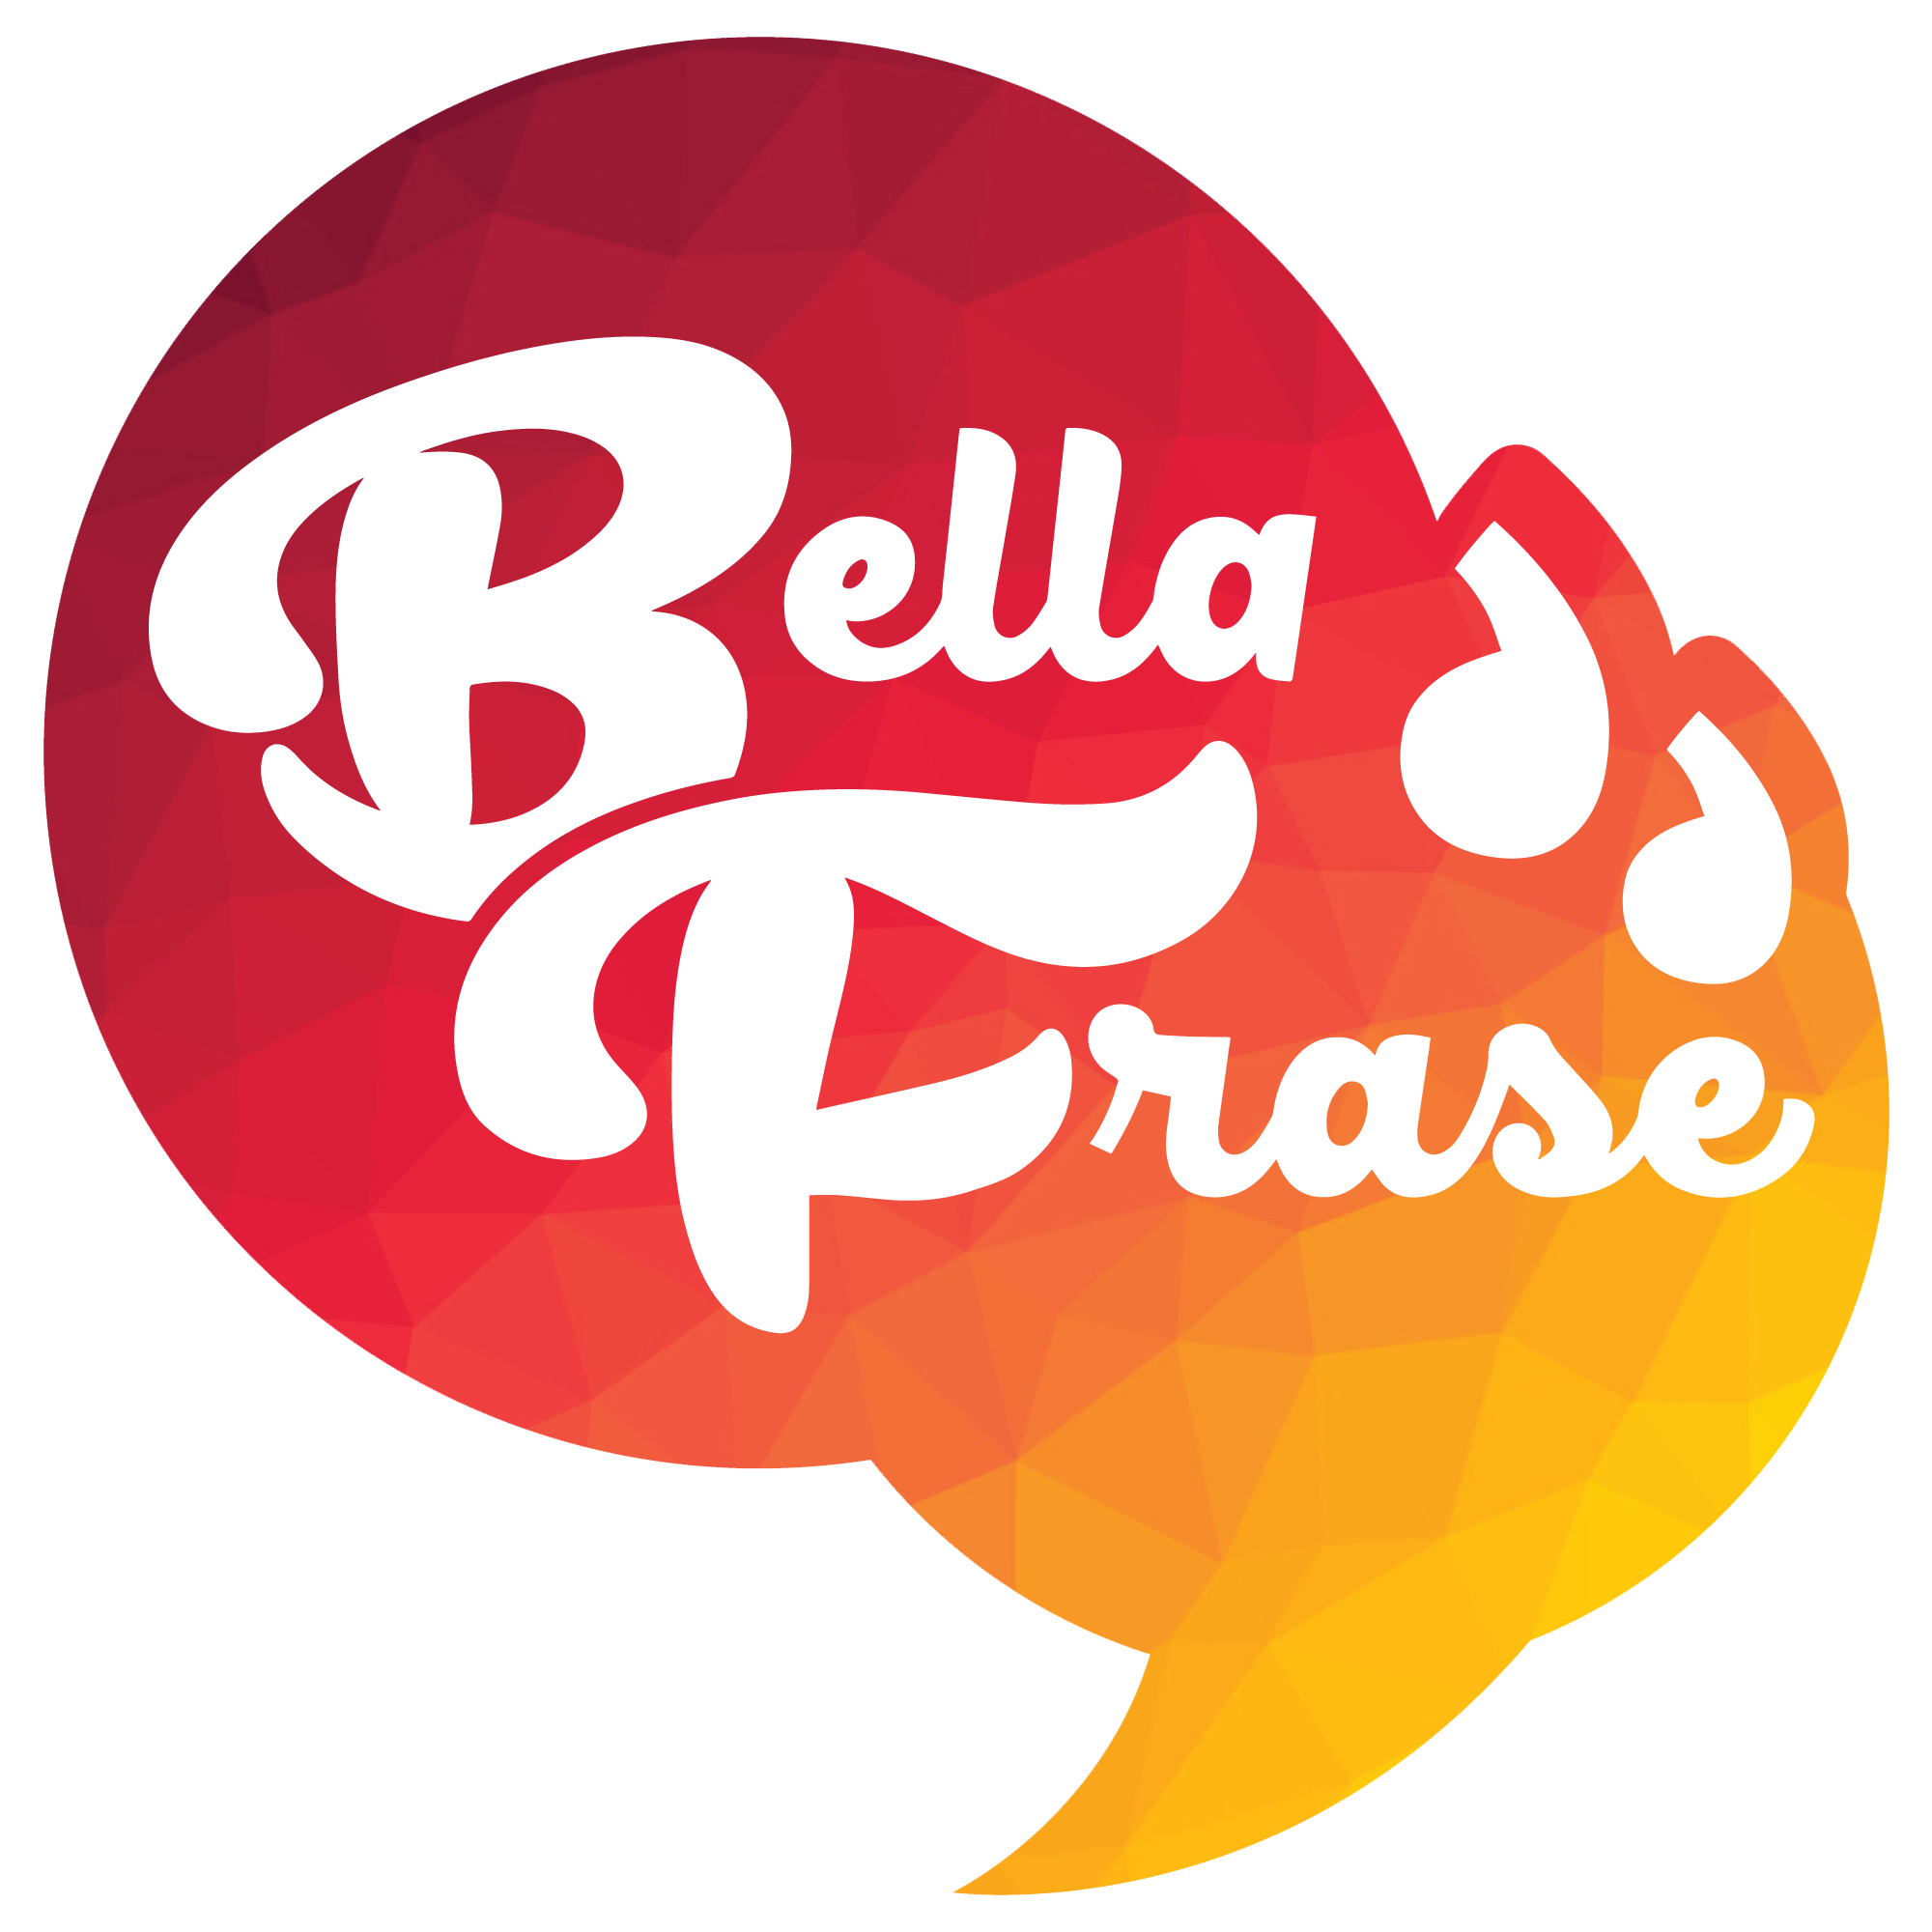 Bella Frase | Adesivos de Parede das suas Frases Favoritas!